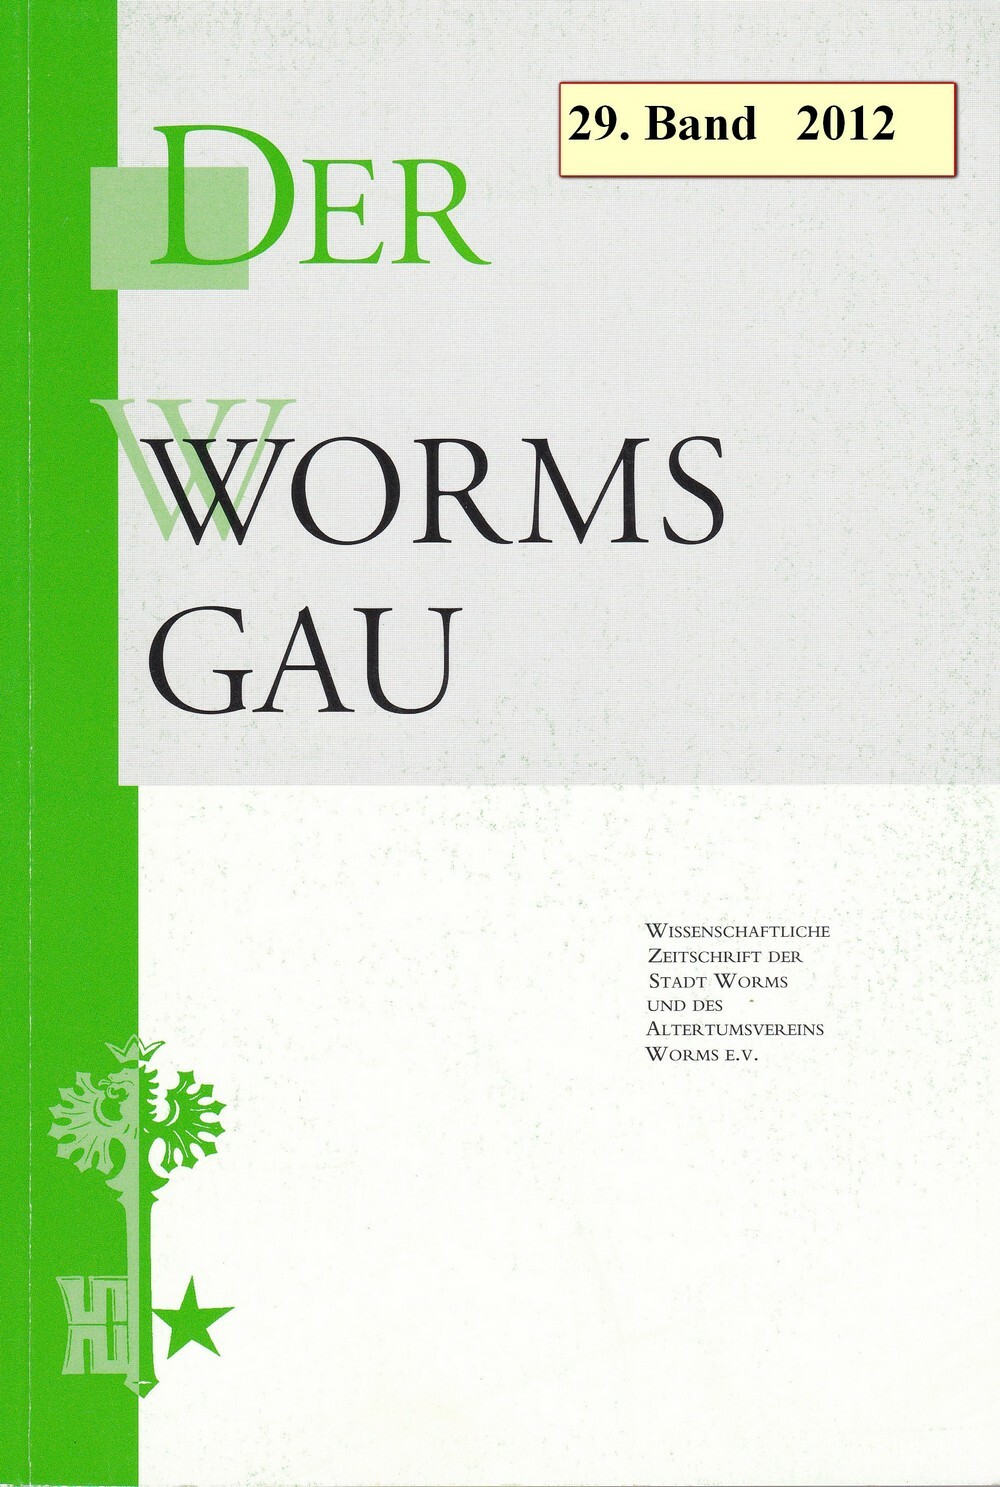 Der Wormsgau 29. Band - 2012 (Kulturverein Guntersblum CC BY-NC-SA)